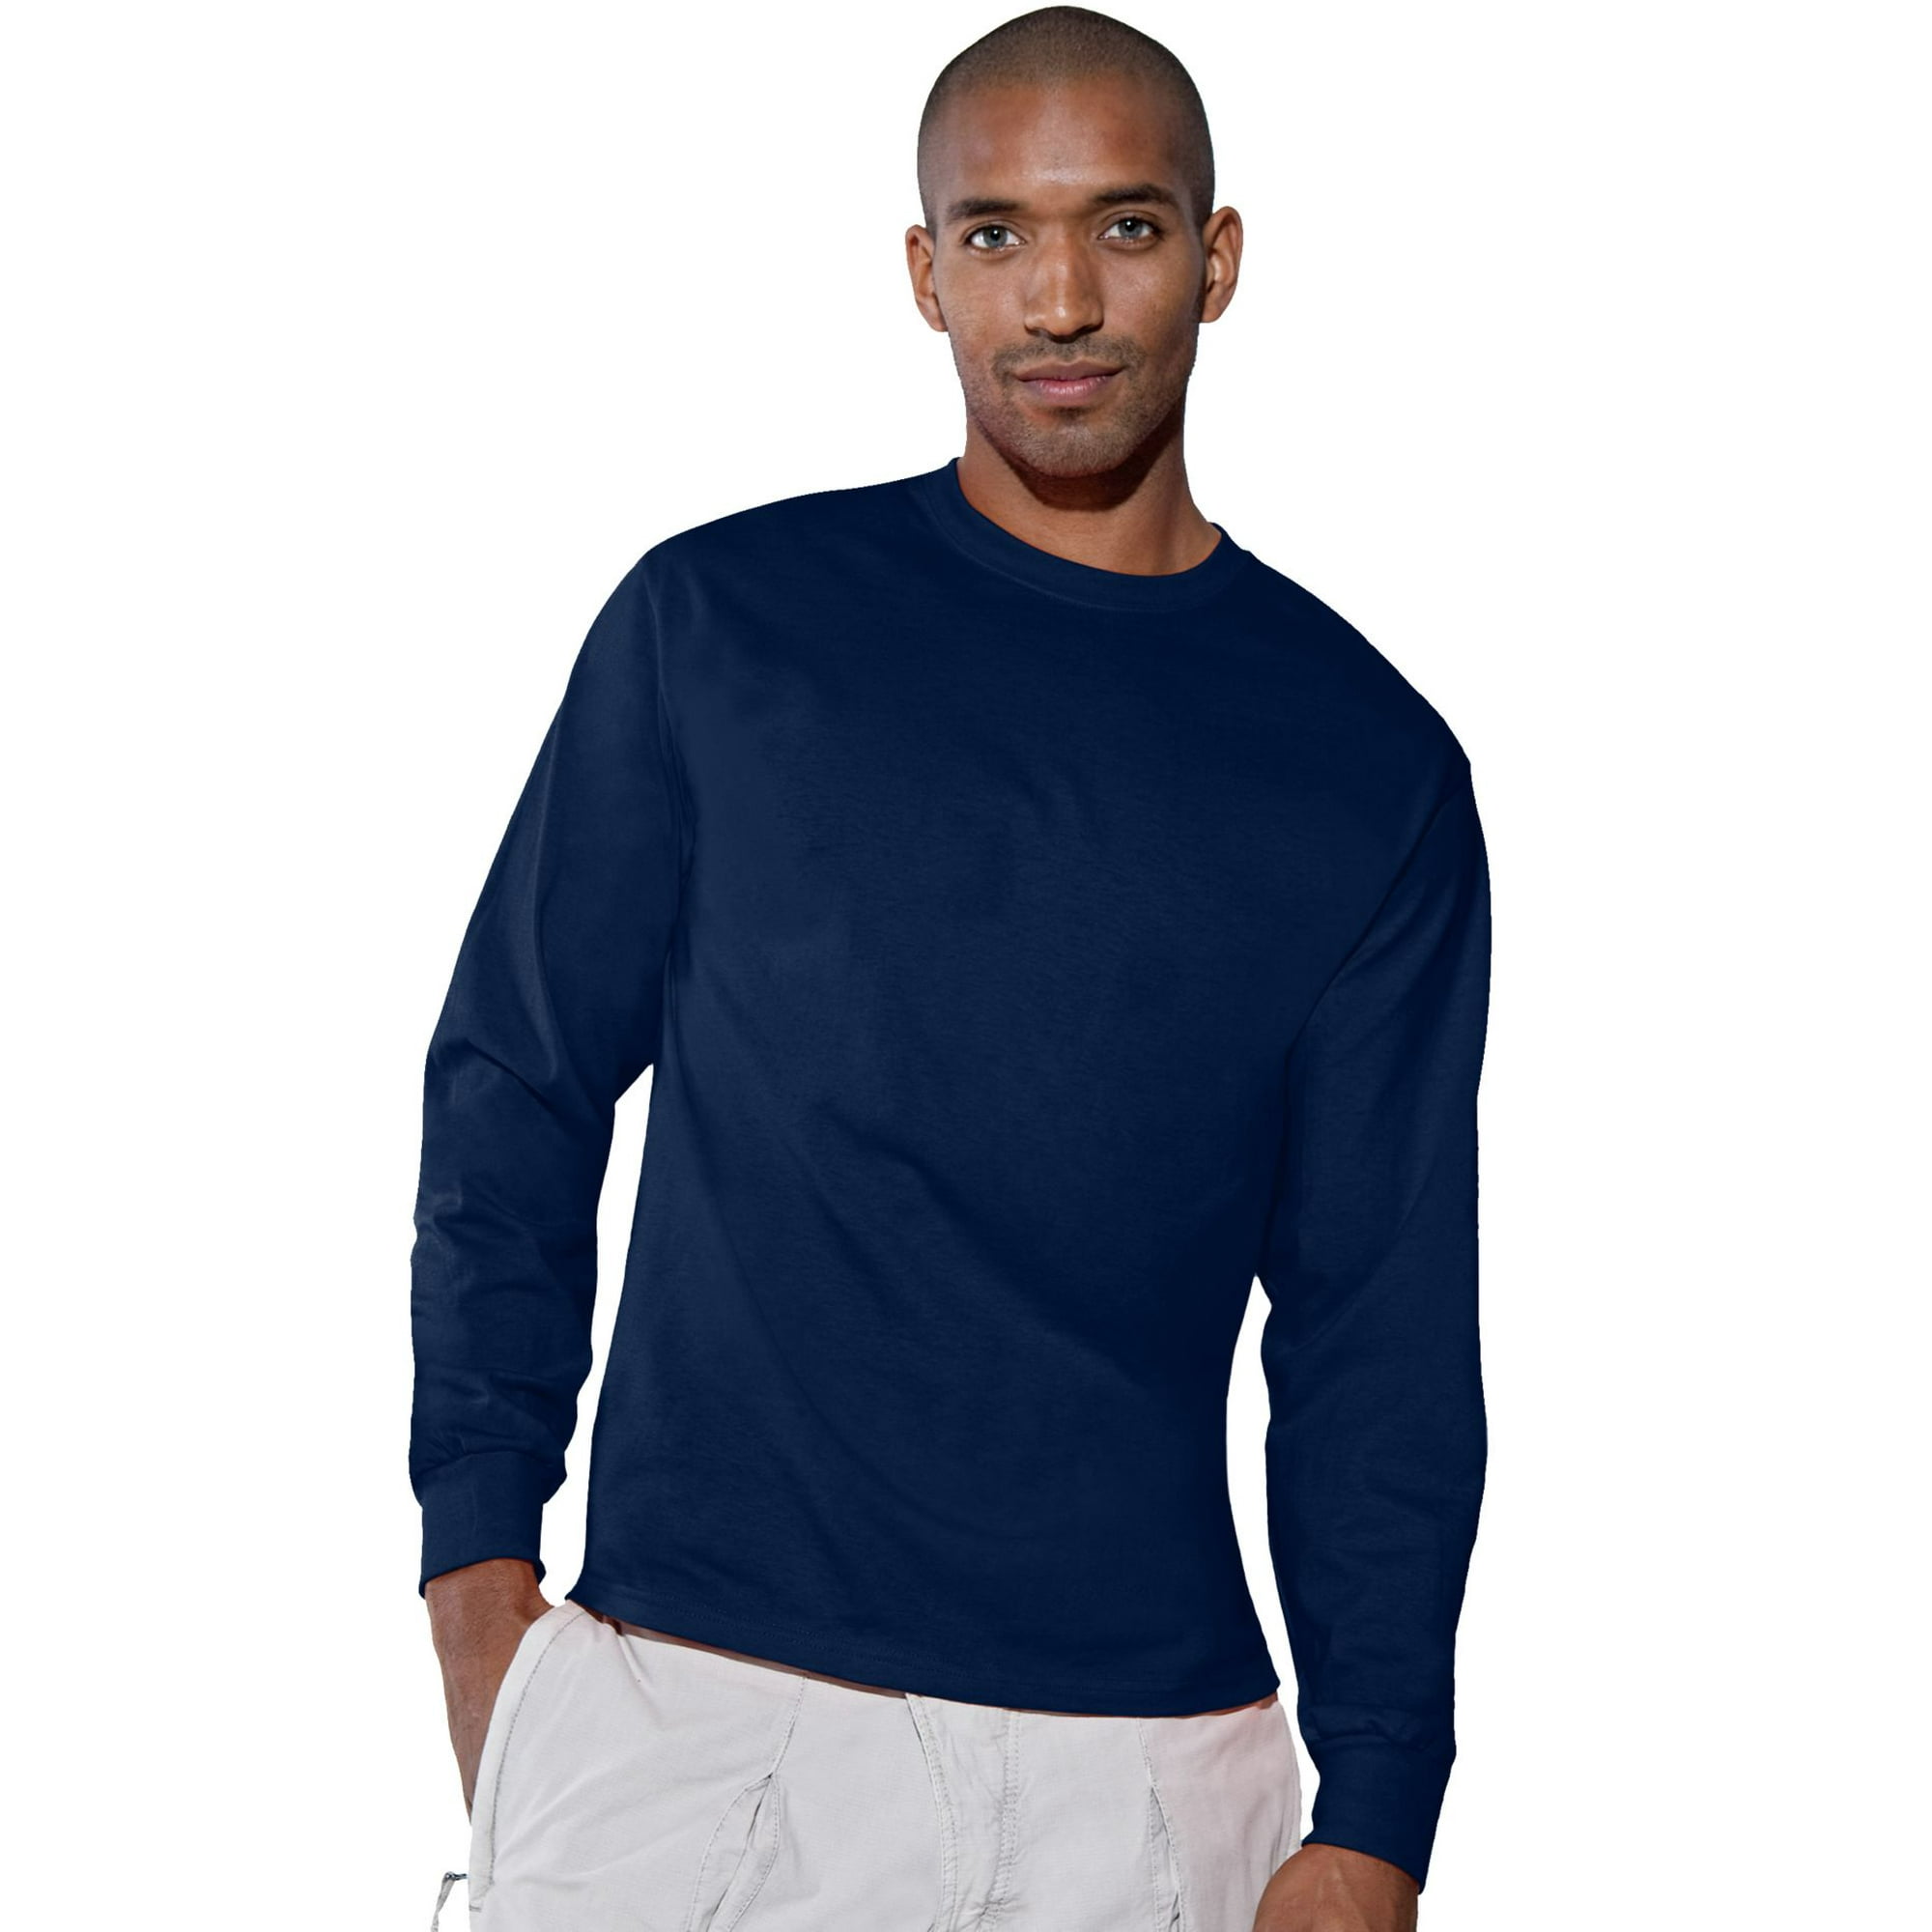 Men Crewneck Long Sleeve fashion t shirts - Walmart.com